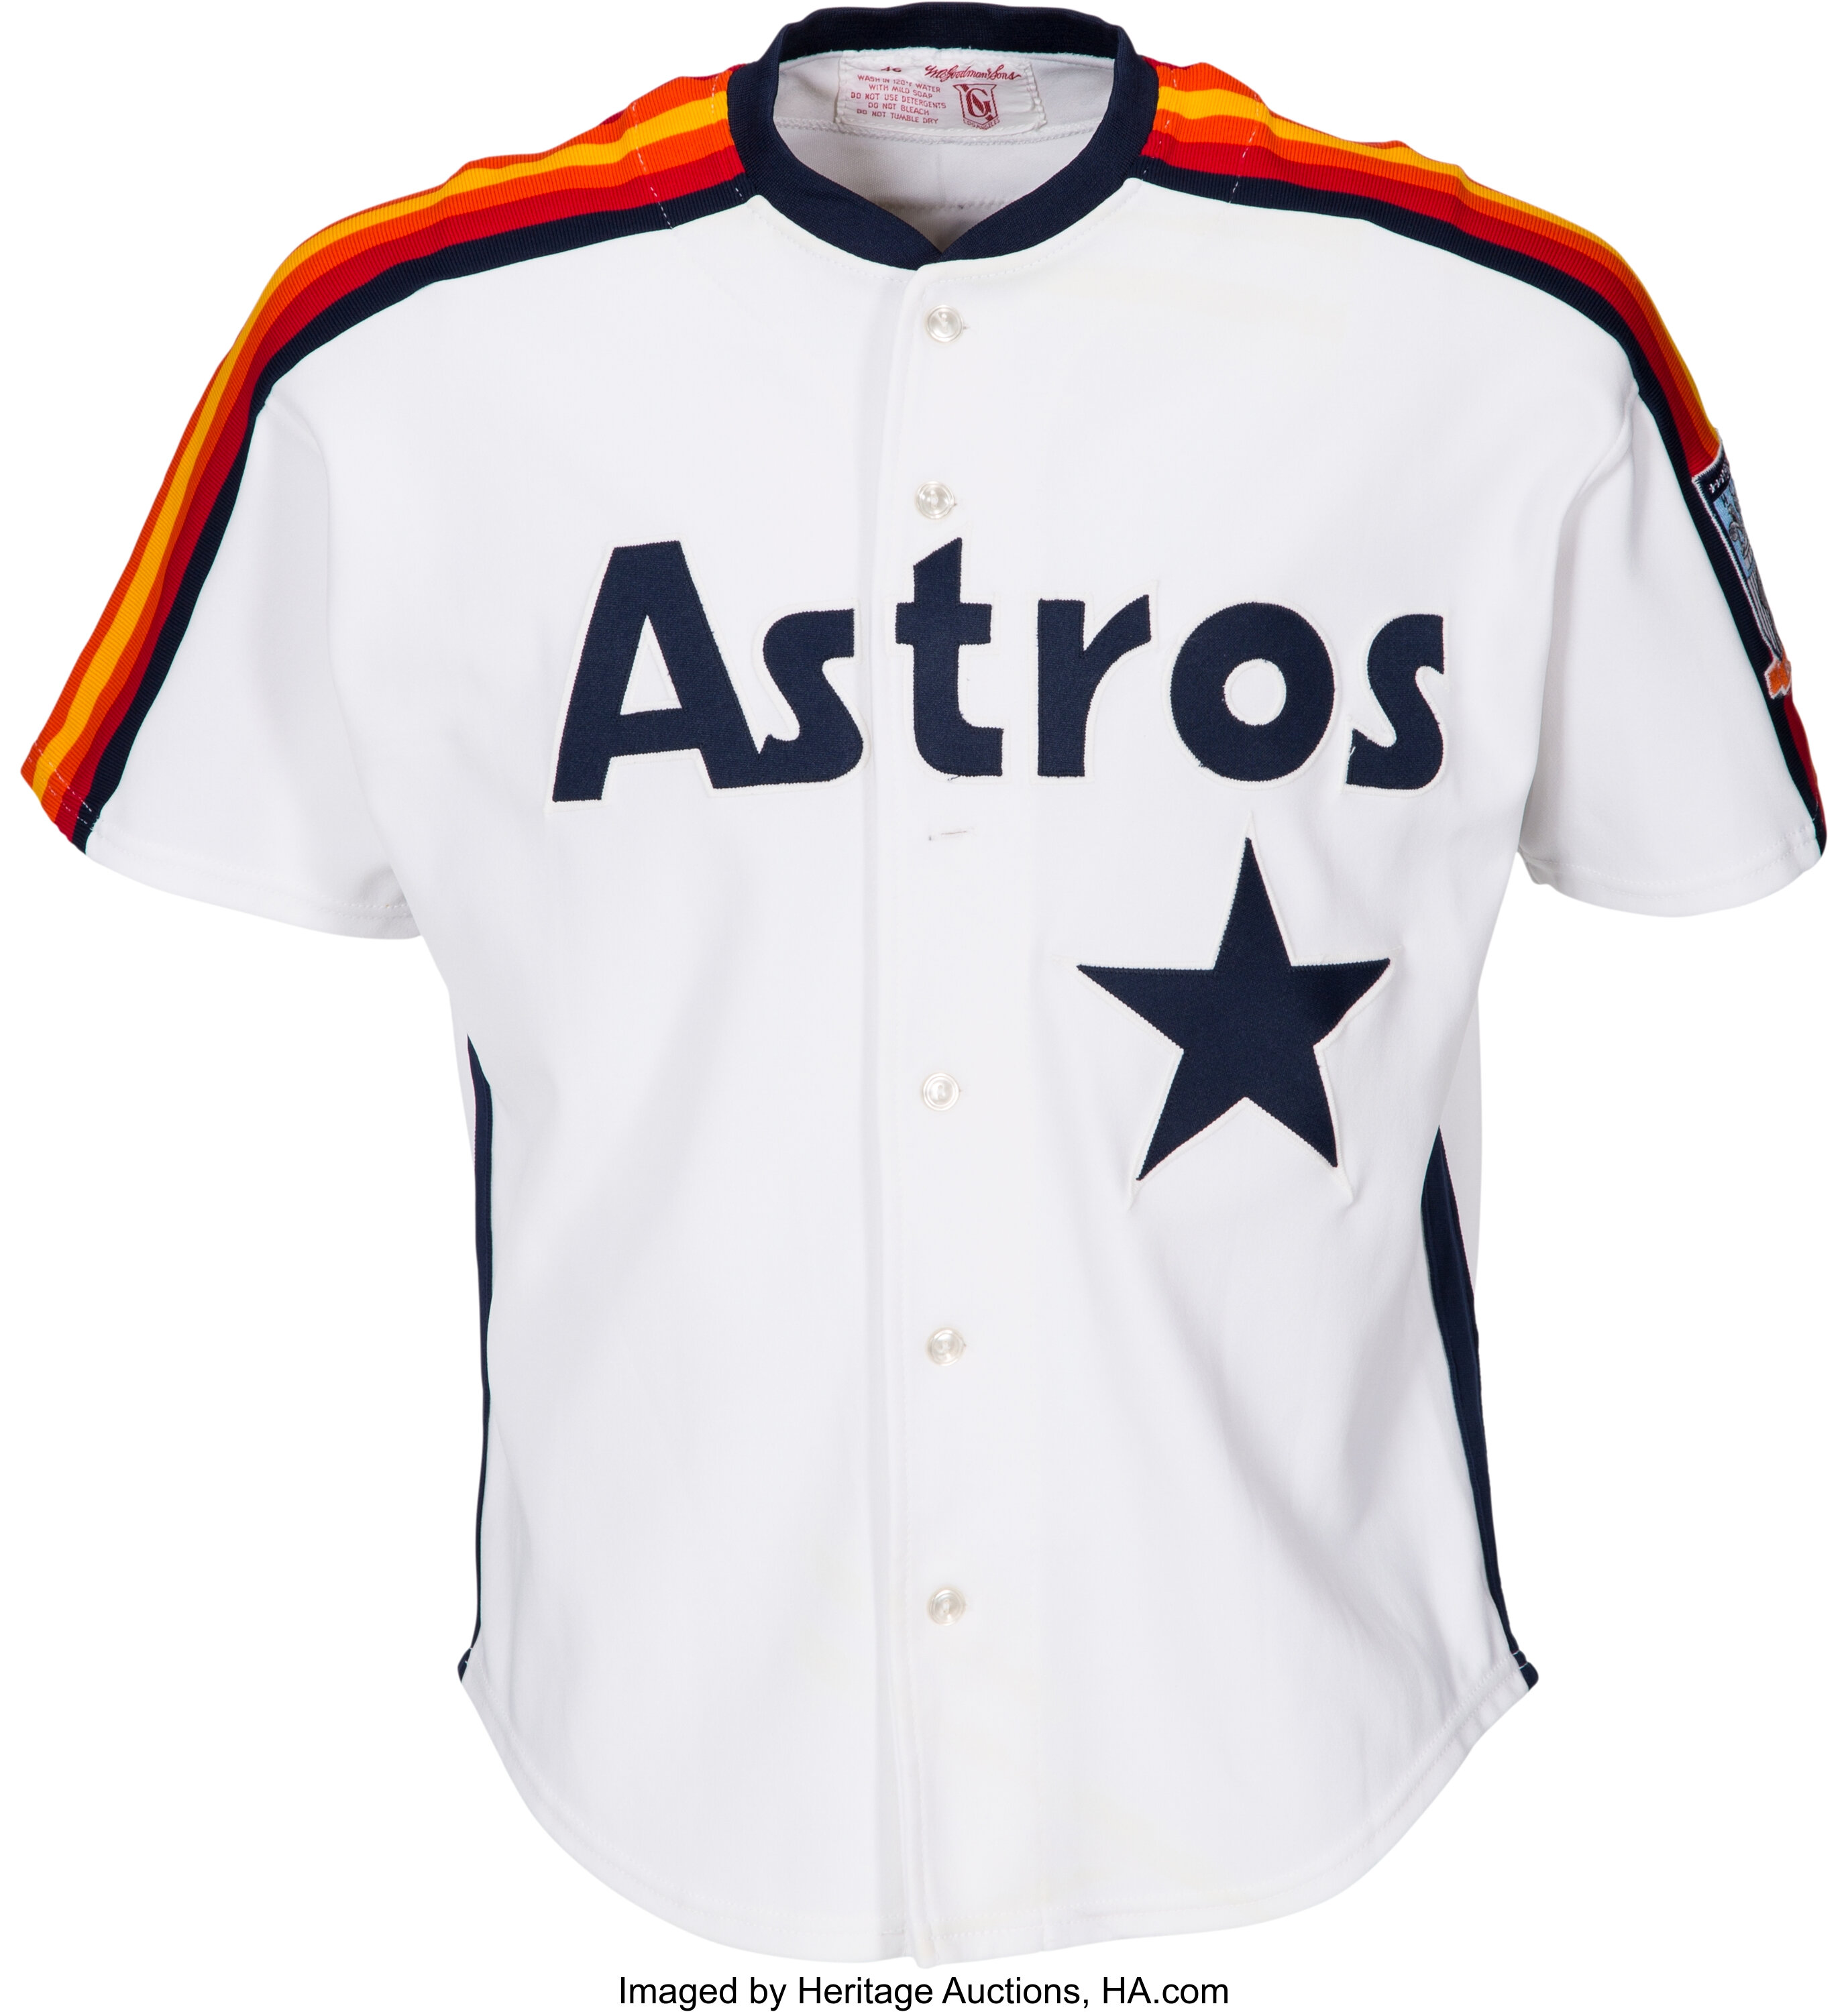 astros 1990 jersey